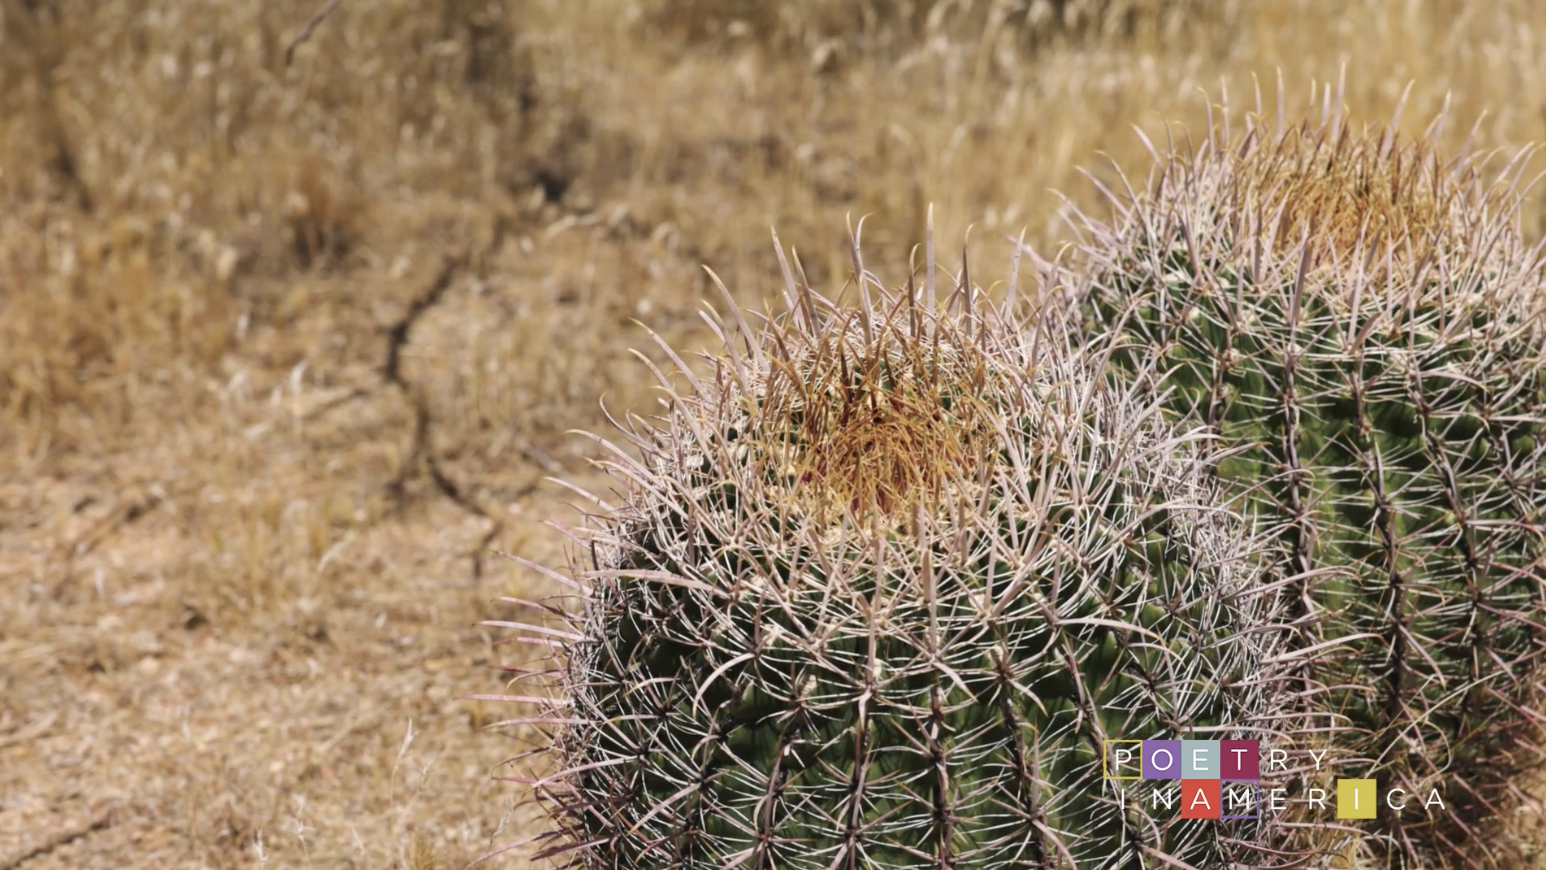 Two barrel cacti in the desert.